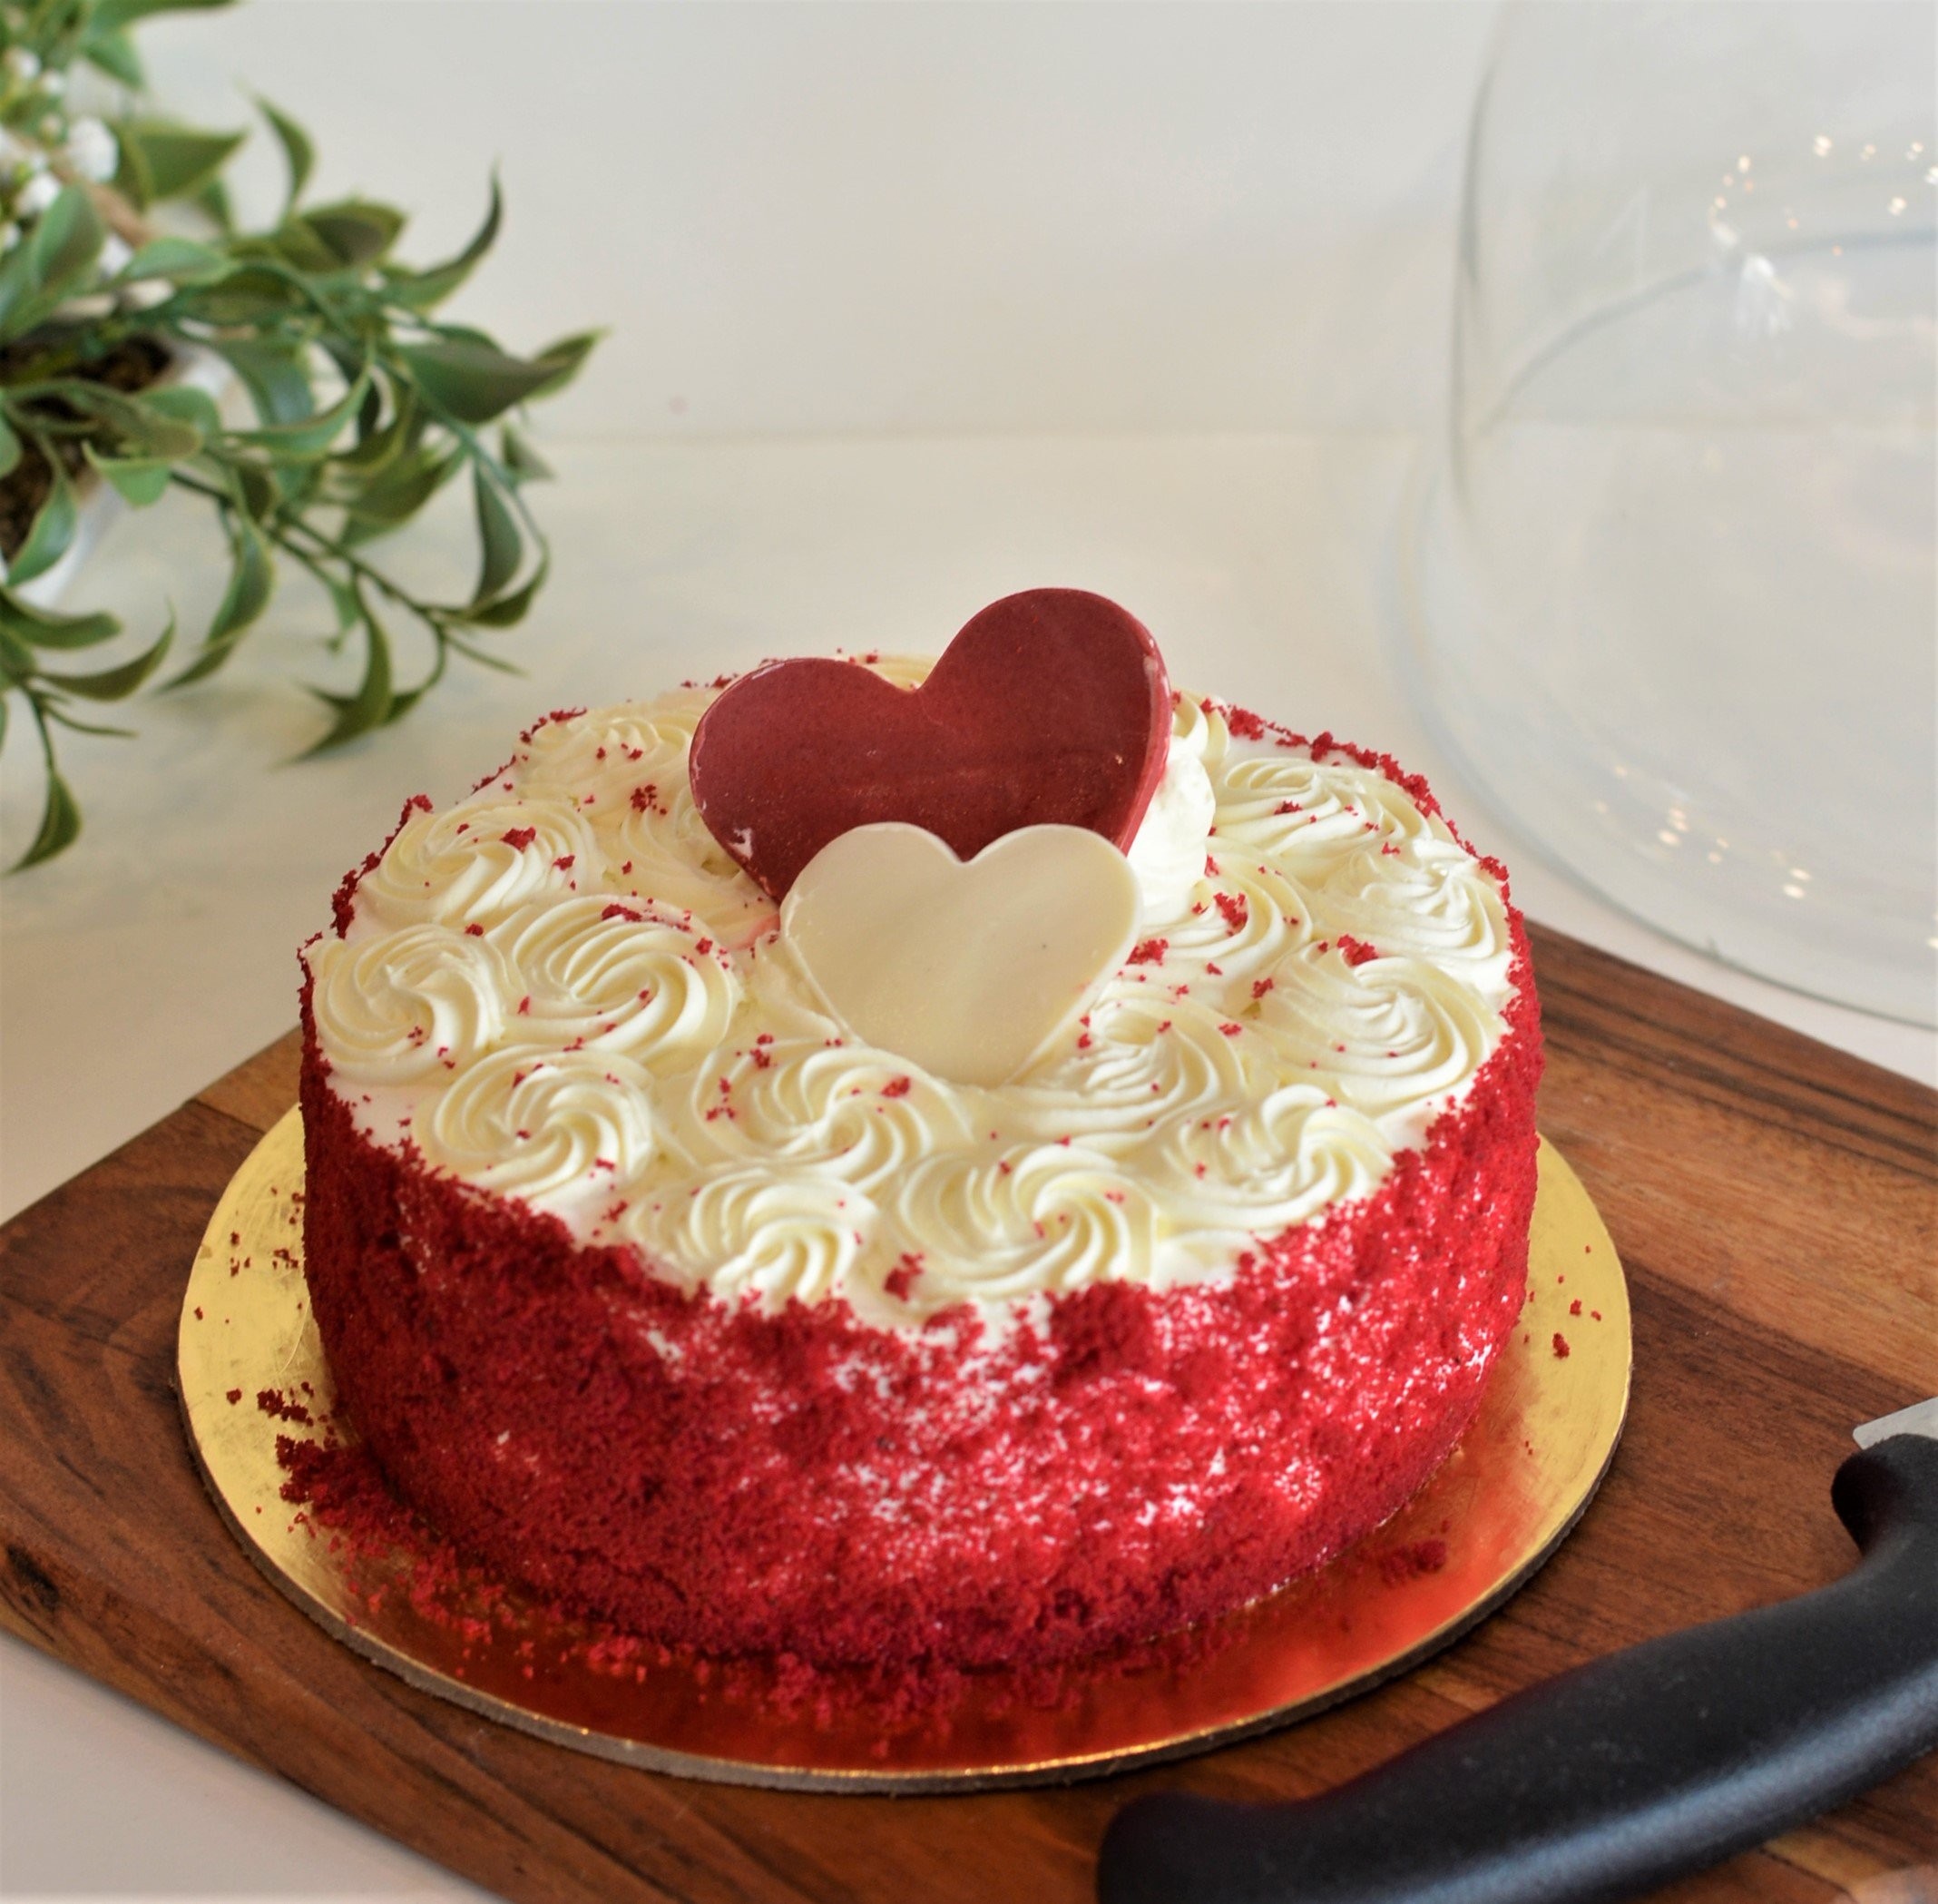 Handmade Red Velvet Cake Delivery in Sussex | Harry Batten